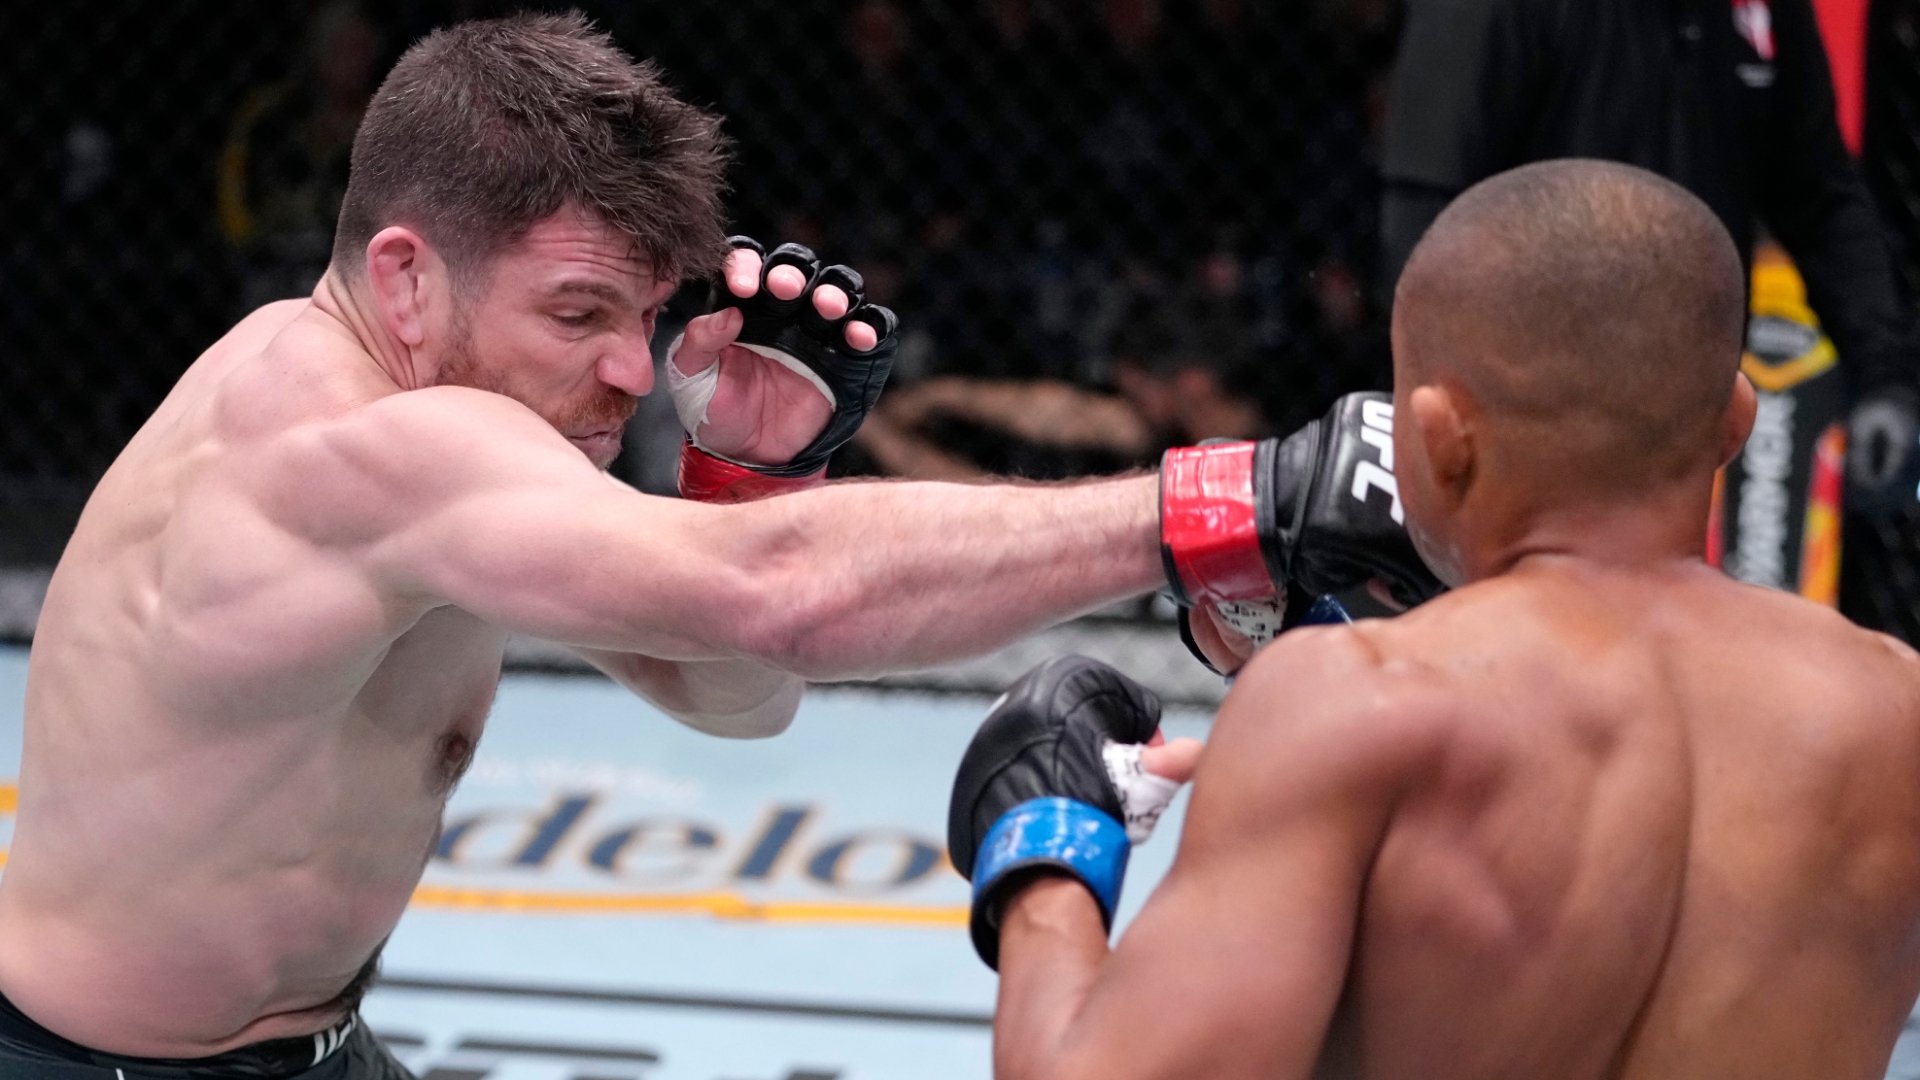 Jim Miller spoils Nikolas Mottas UFC debut - Stream the Video